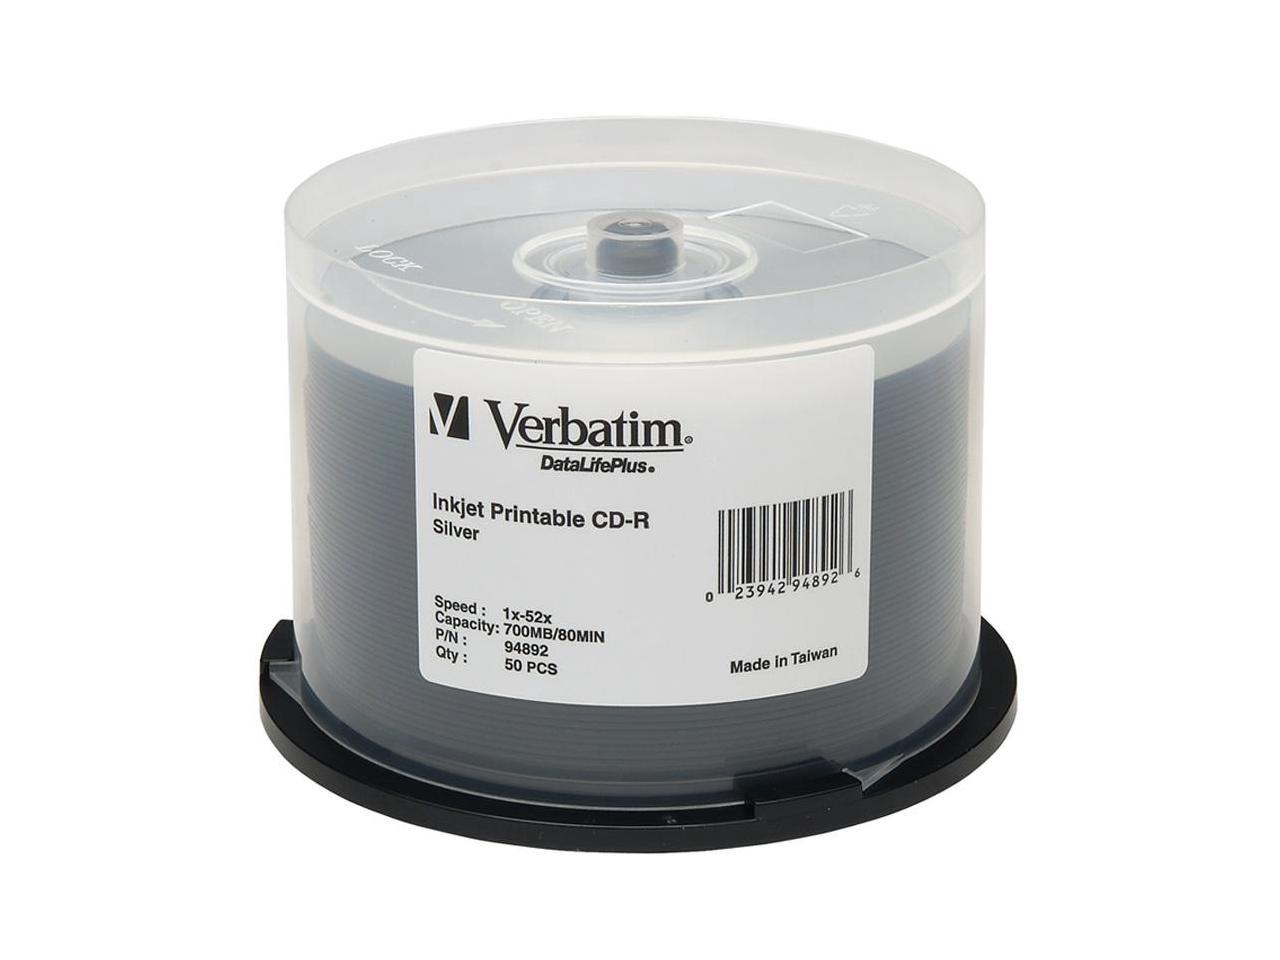 verbatim-700mb-52x-cd-r-inkjet-printable-50-packs-datalifeplus-silver